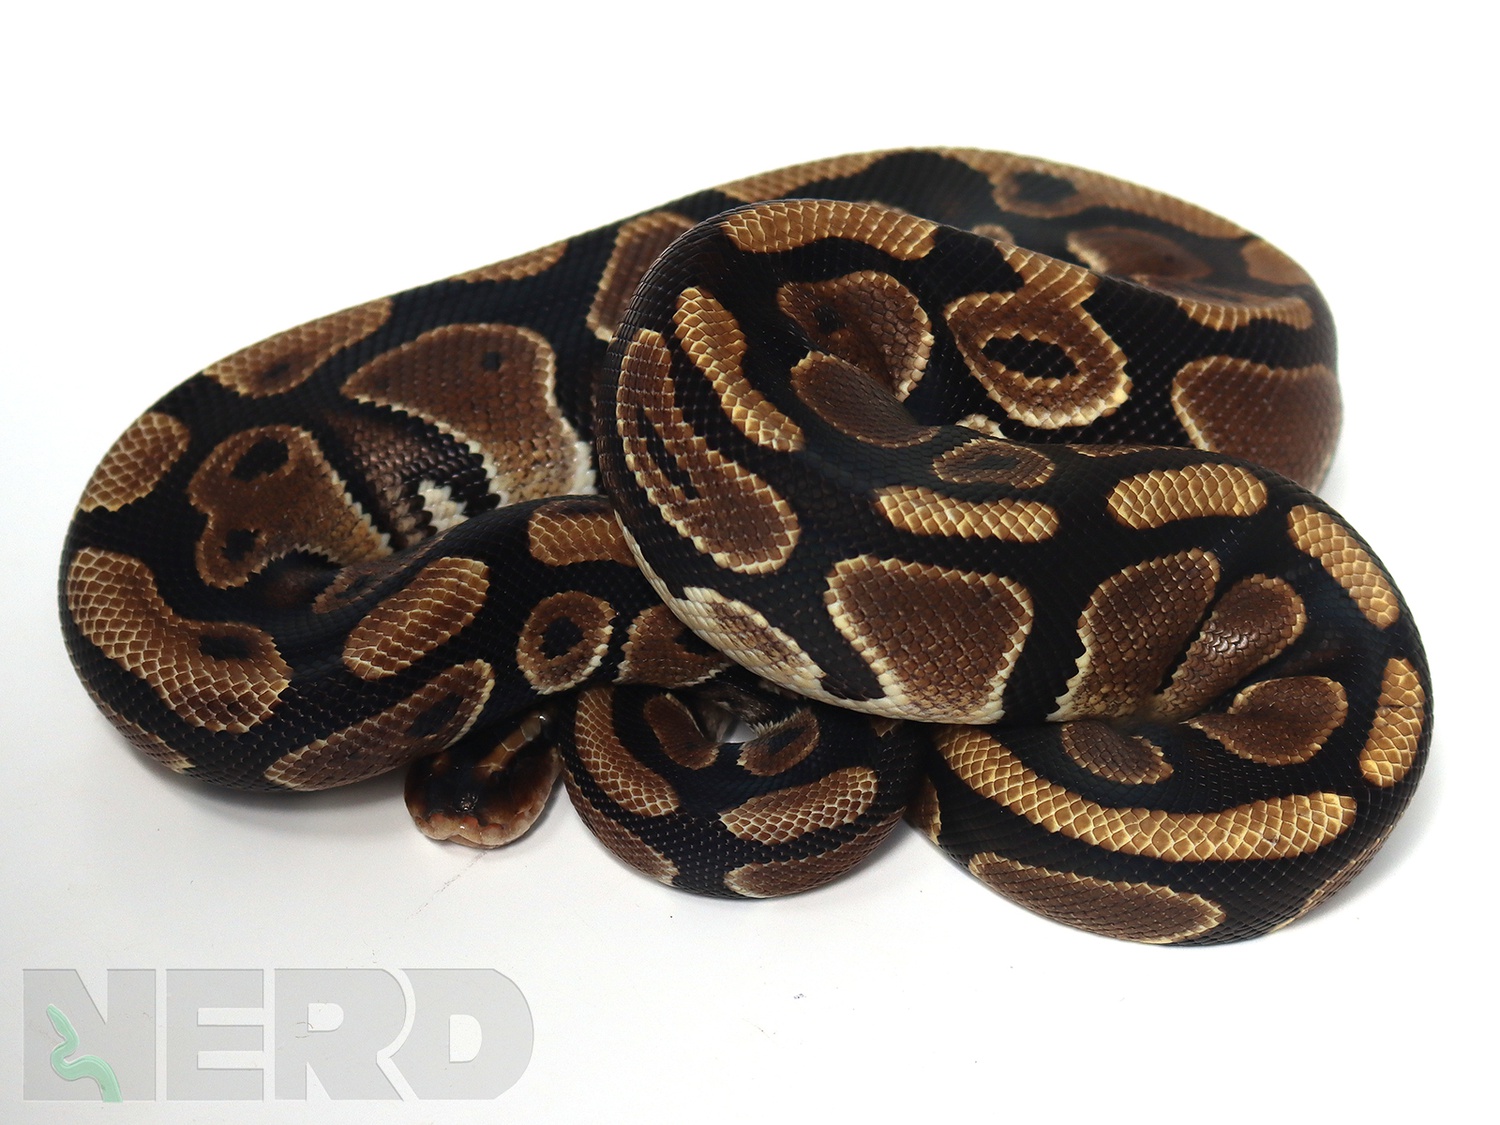 Gene X Poss Het Pied Ball Python by New England Reptile Distributors